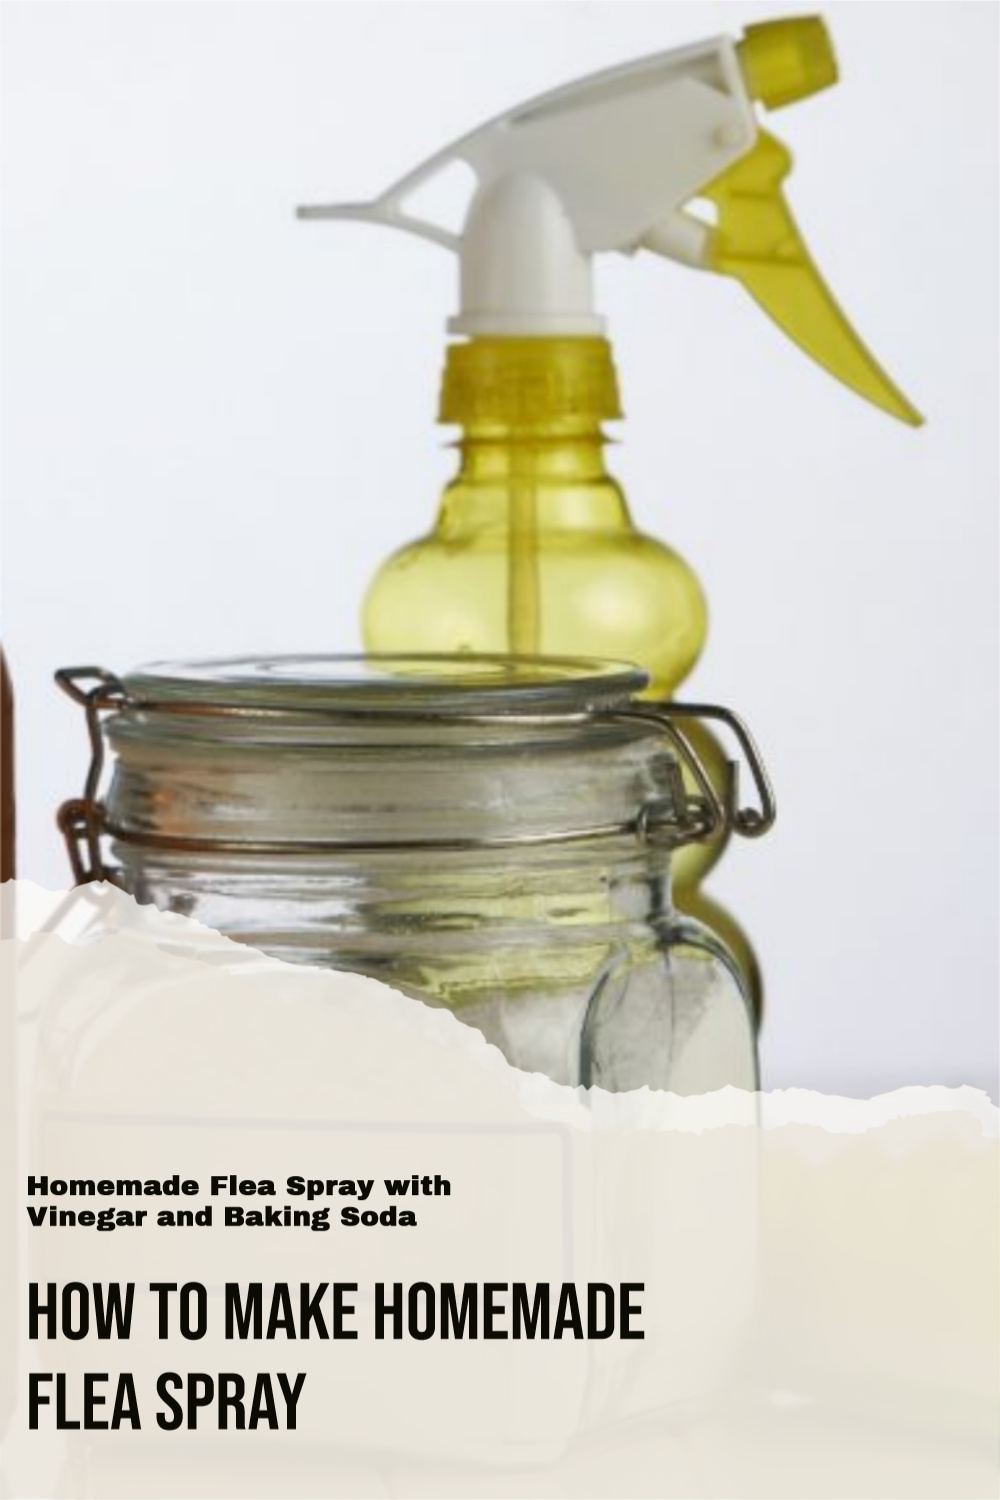 Instruction to prepare homemade flea spray with vinegar and baking soda